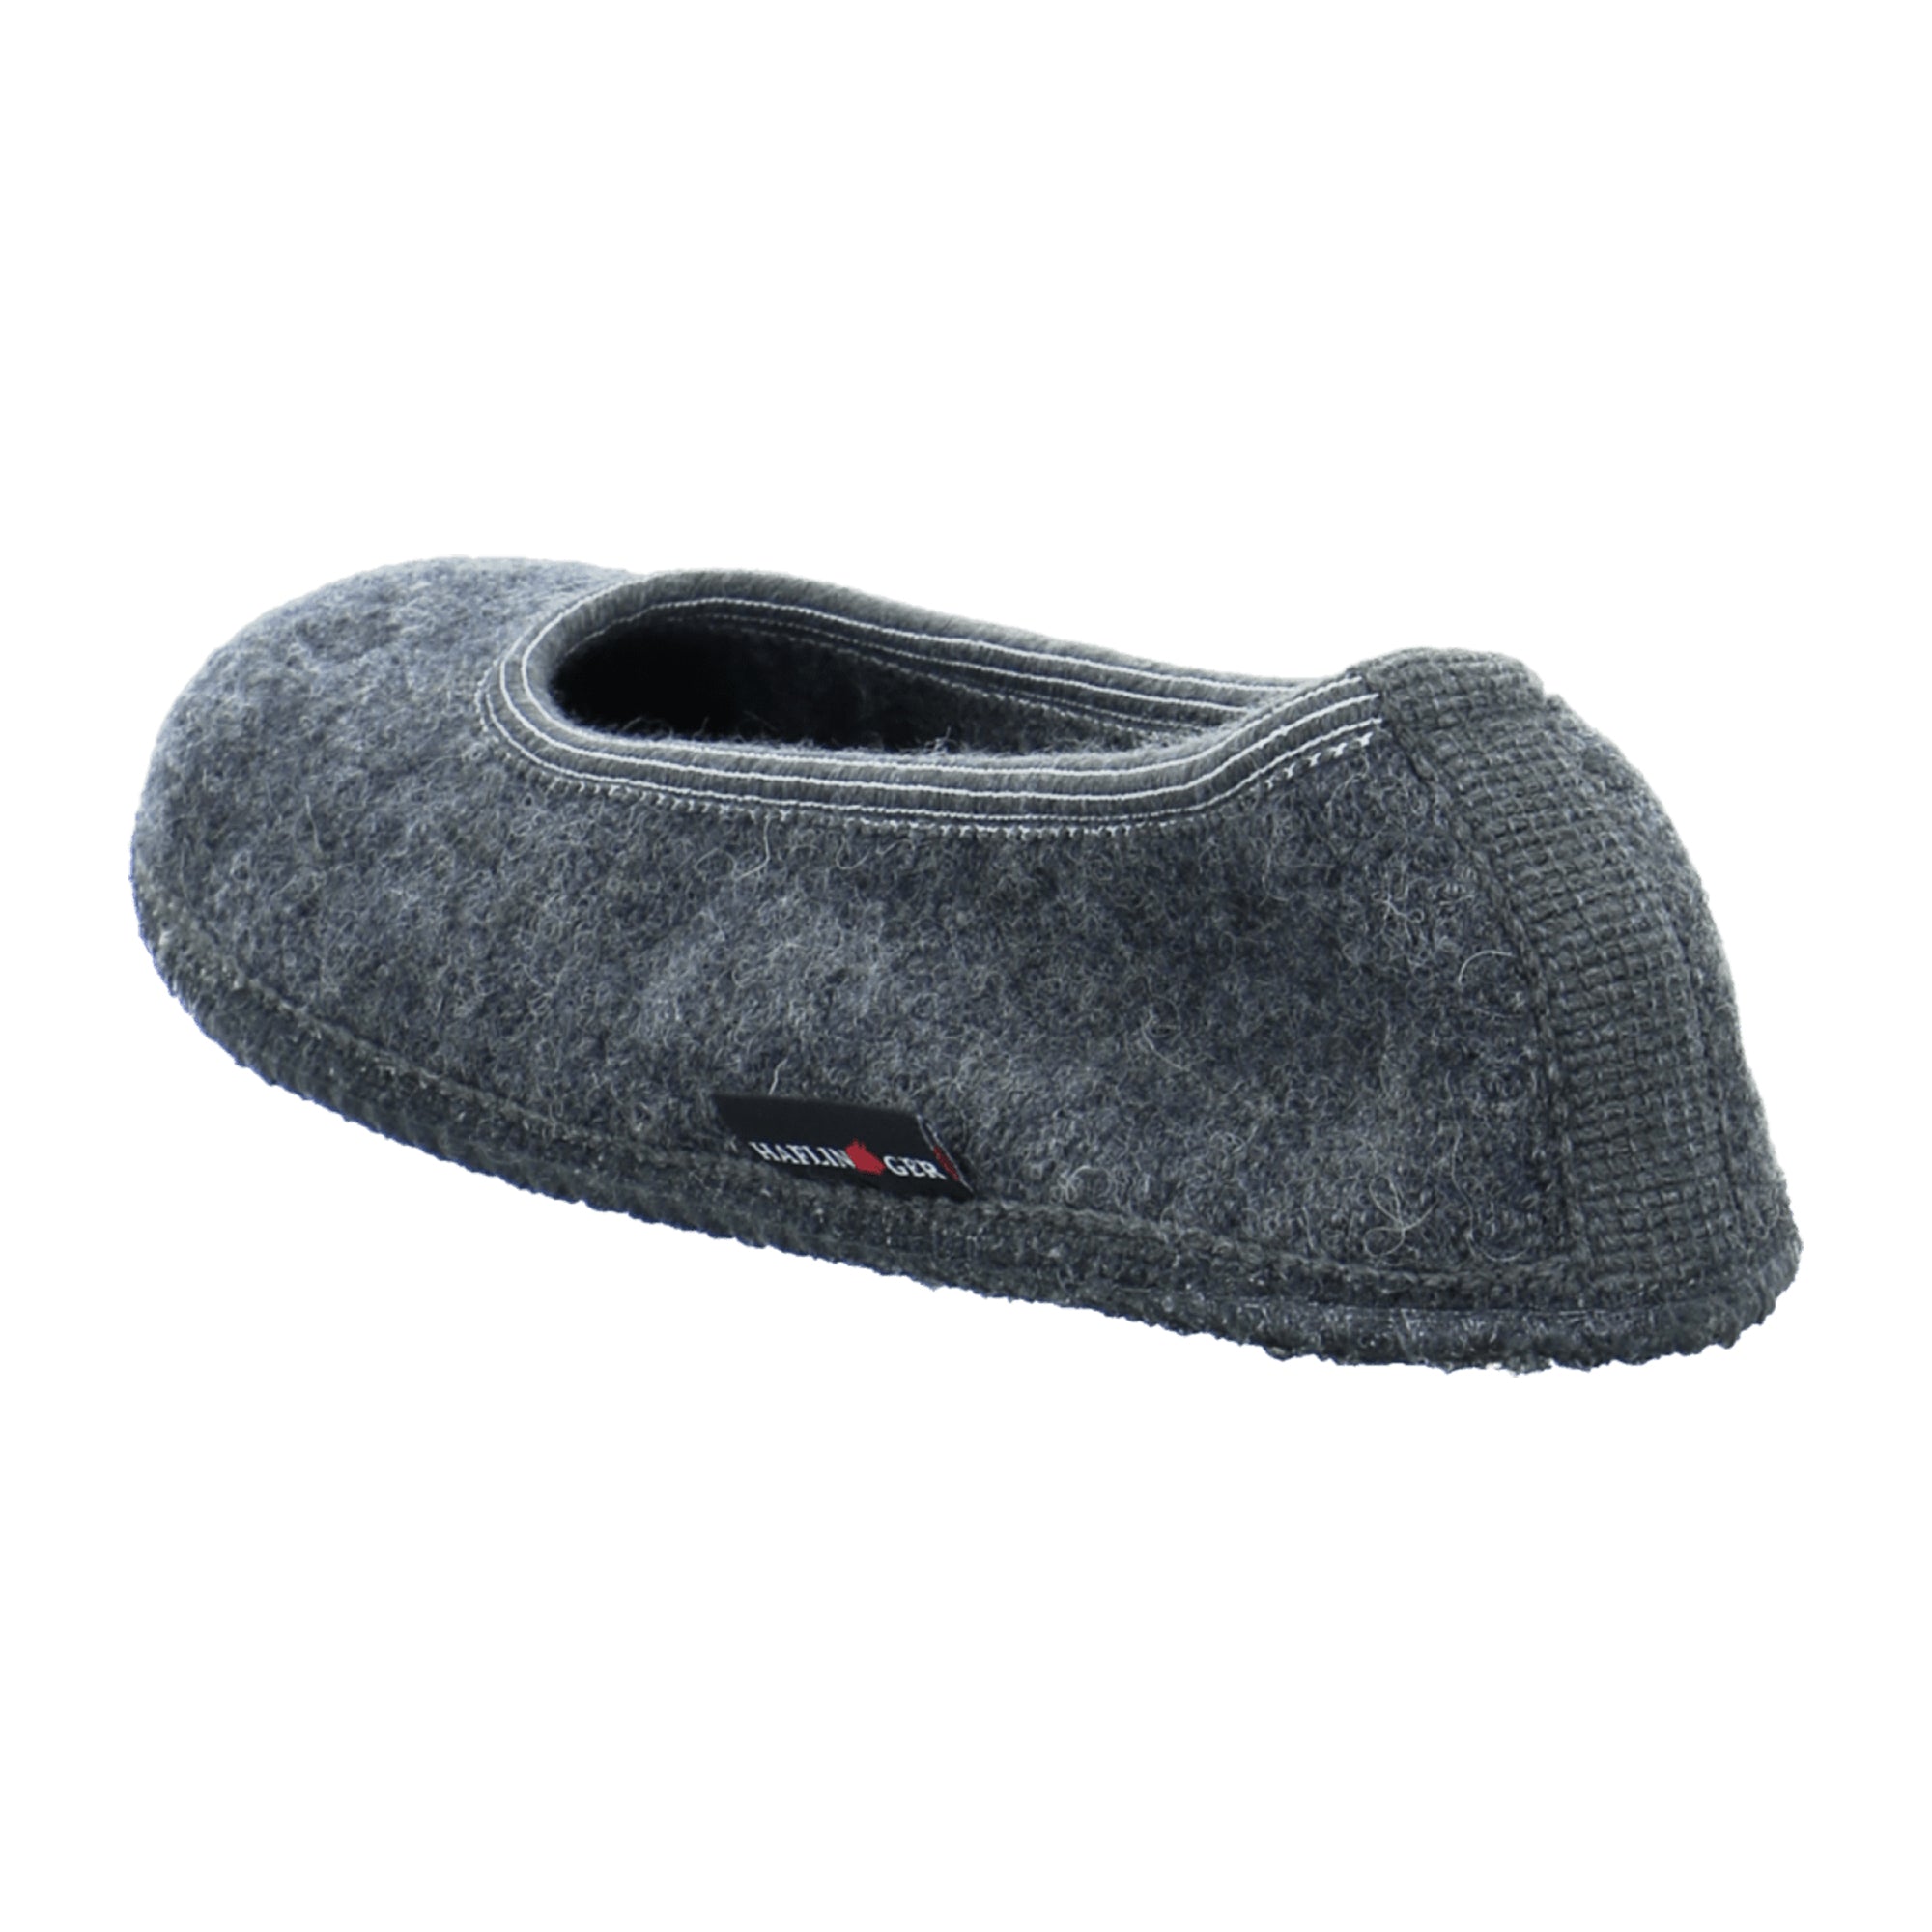 Haflinger Marina Women's Slippers - Stylish & Comfortable Grey Footwear